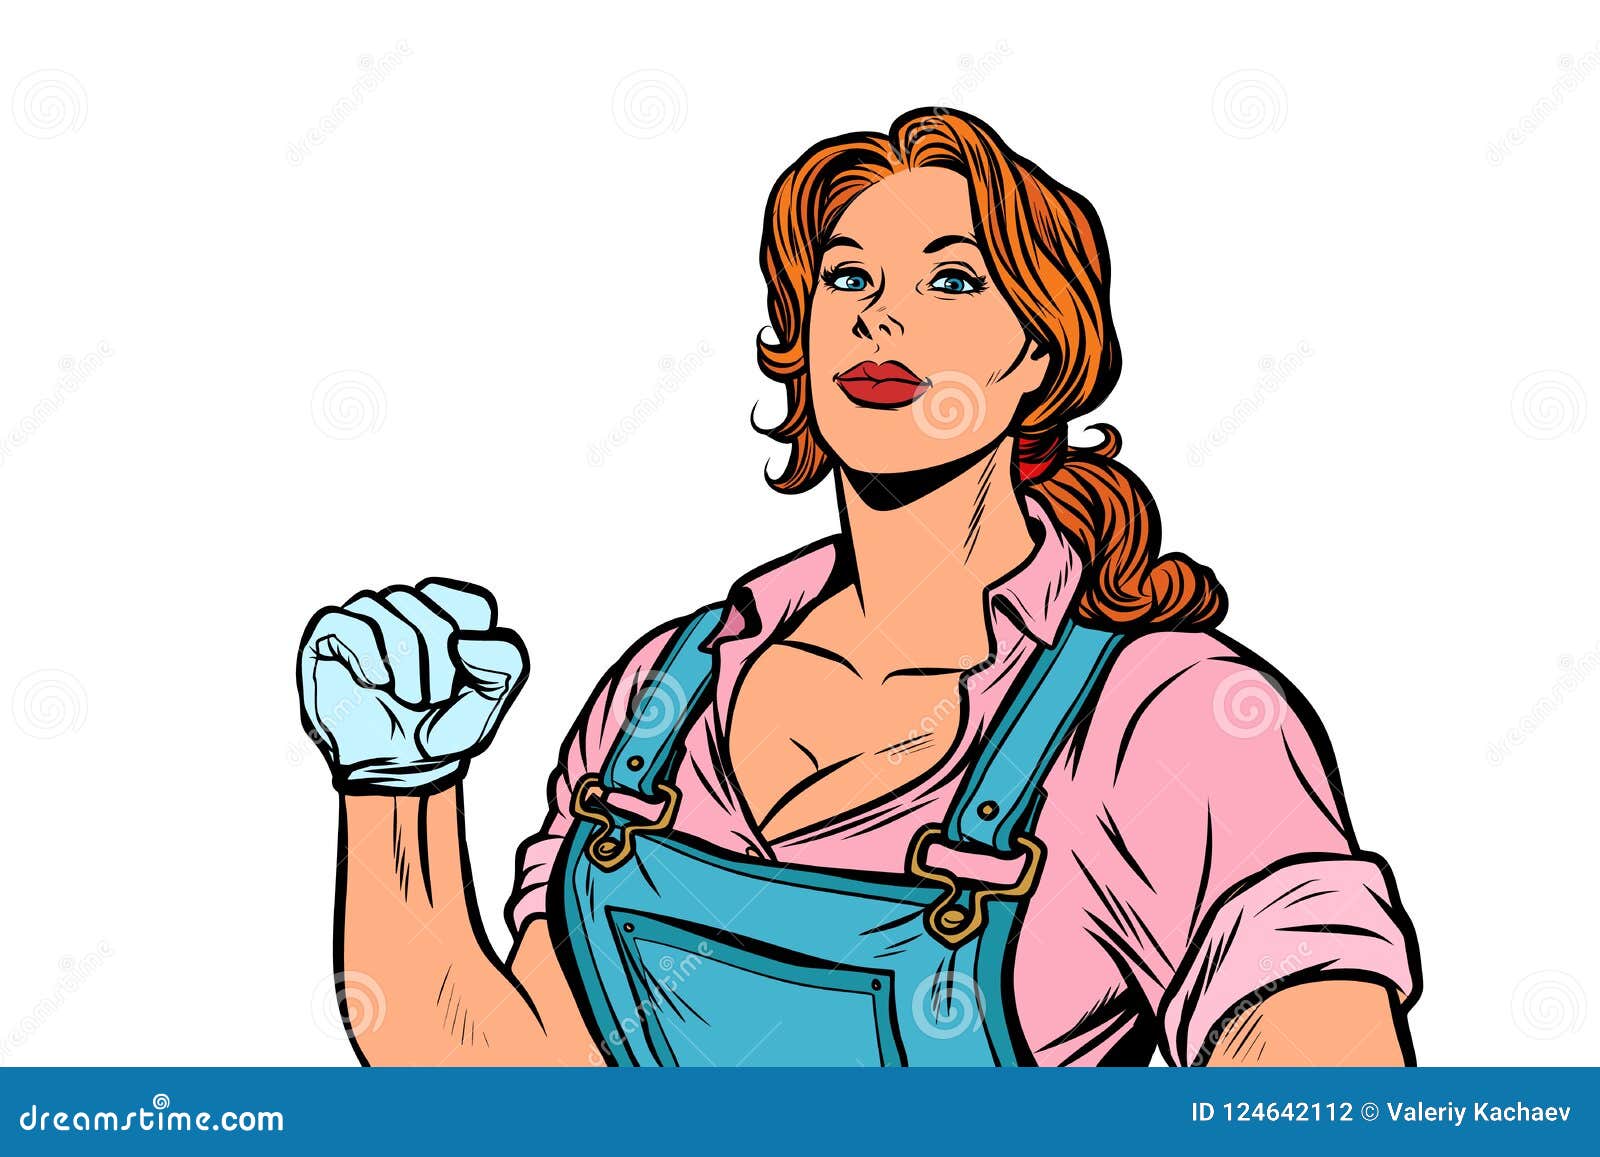 https://thumbs.dreamstime.com/z/woman-muscular-strong-worker-pop-art-retro-vector-illustration-vintage-kitsch-woman-muscular-strong-worker-124642112.jpg